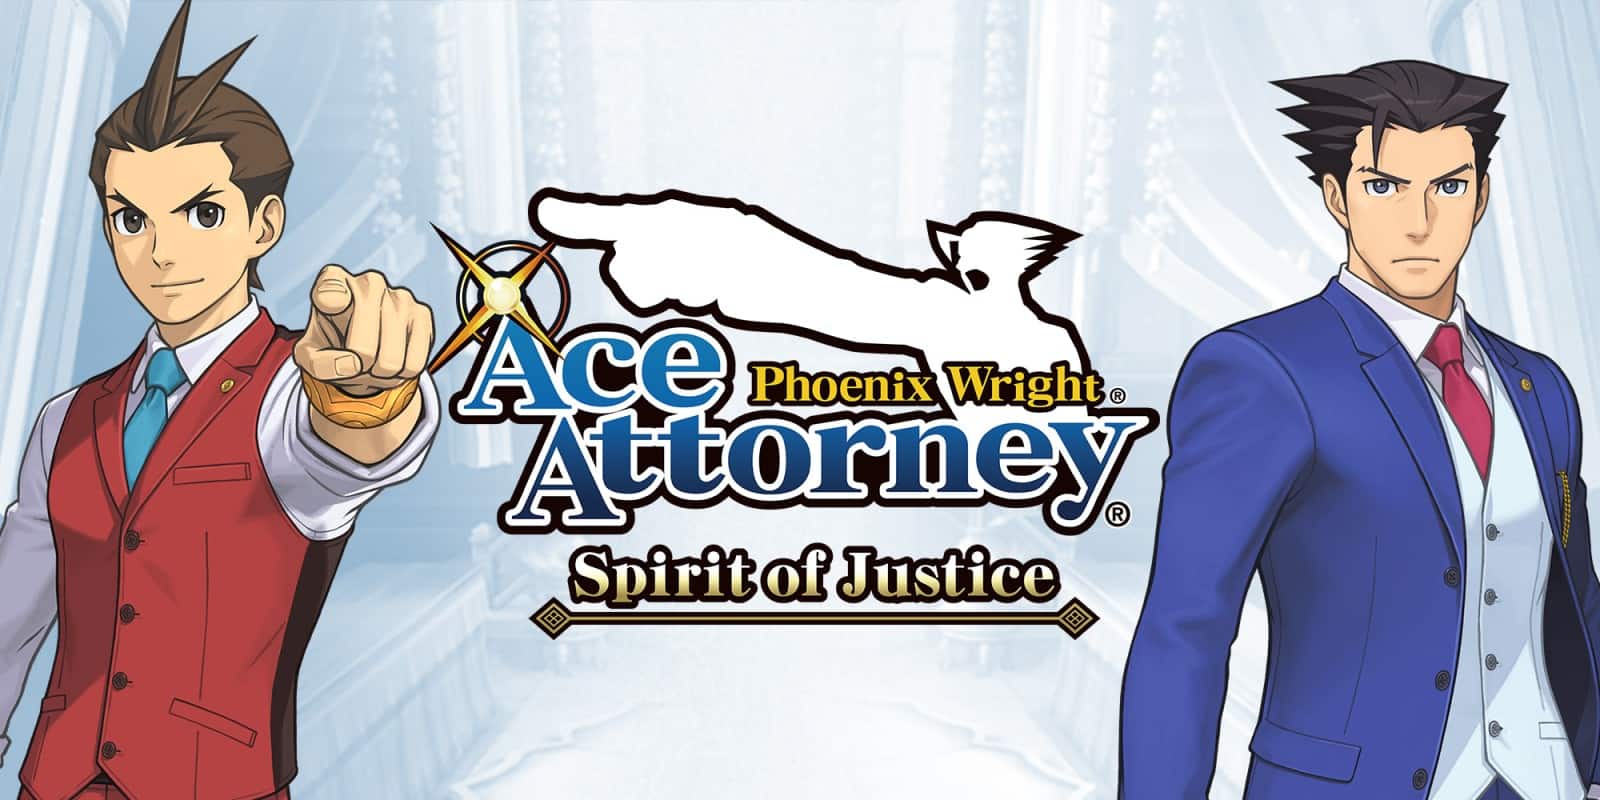 Ace Attorney 